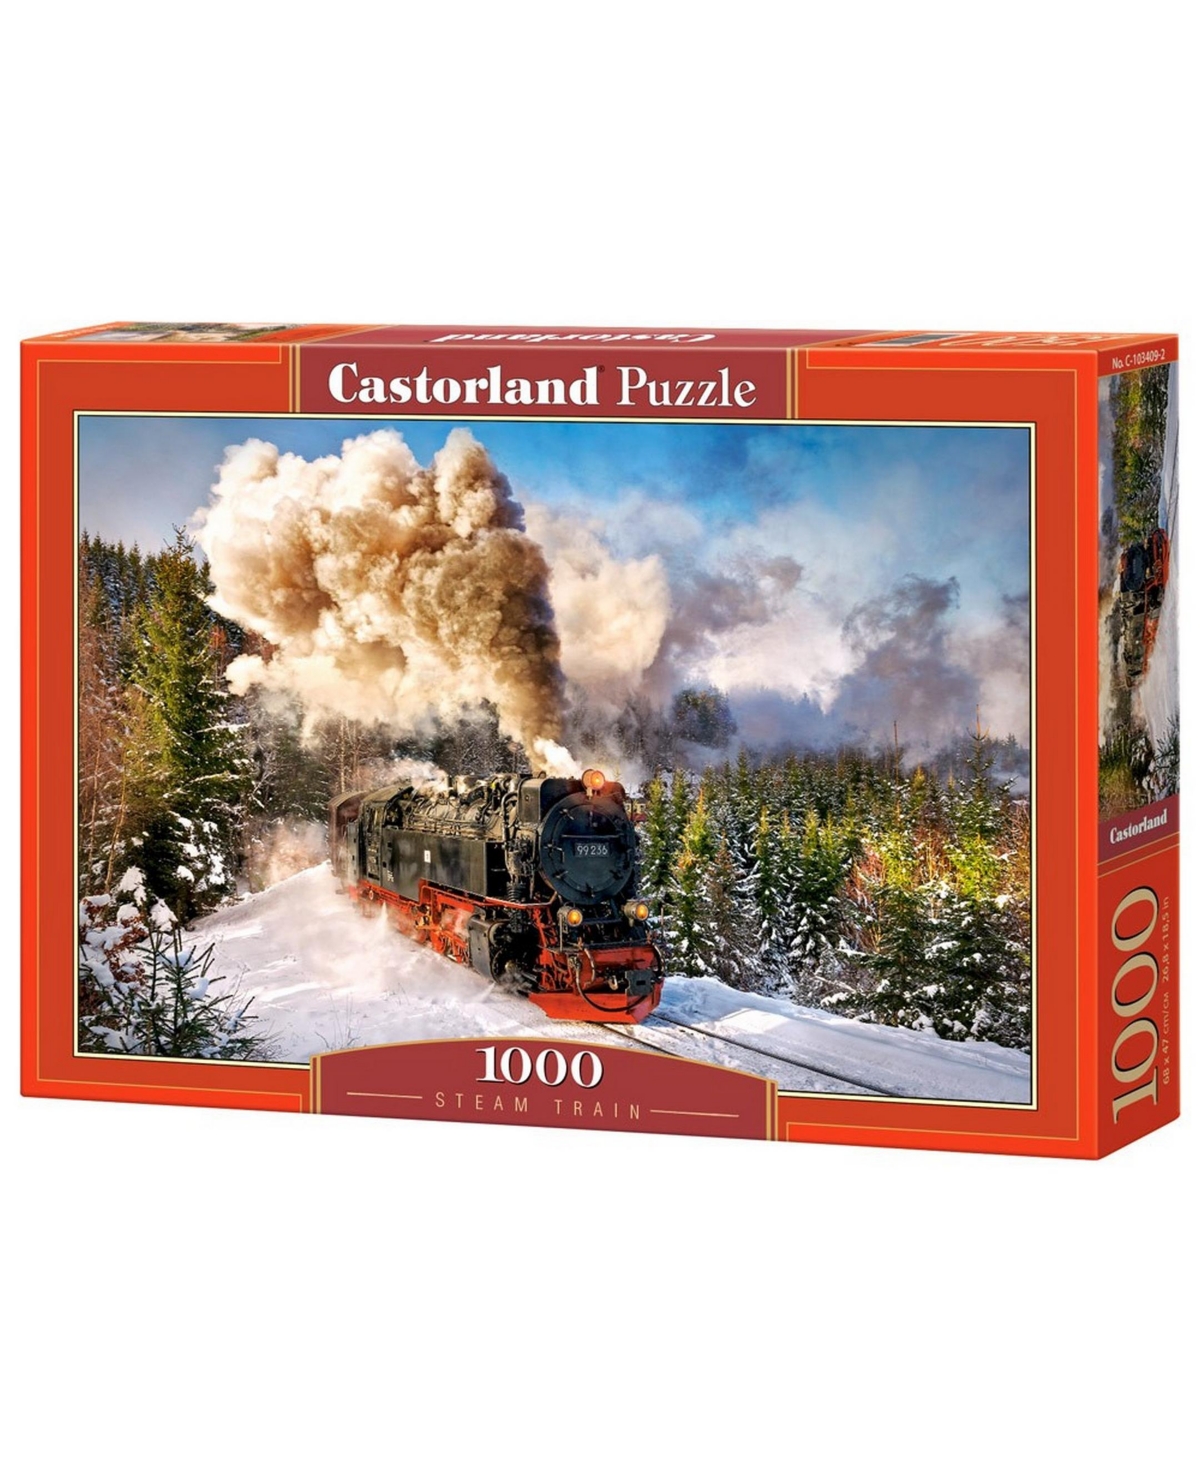 Castorland Steam Train Jigsaw Puzzle Set, 1000 Piece In Multicolor